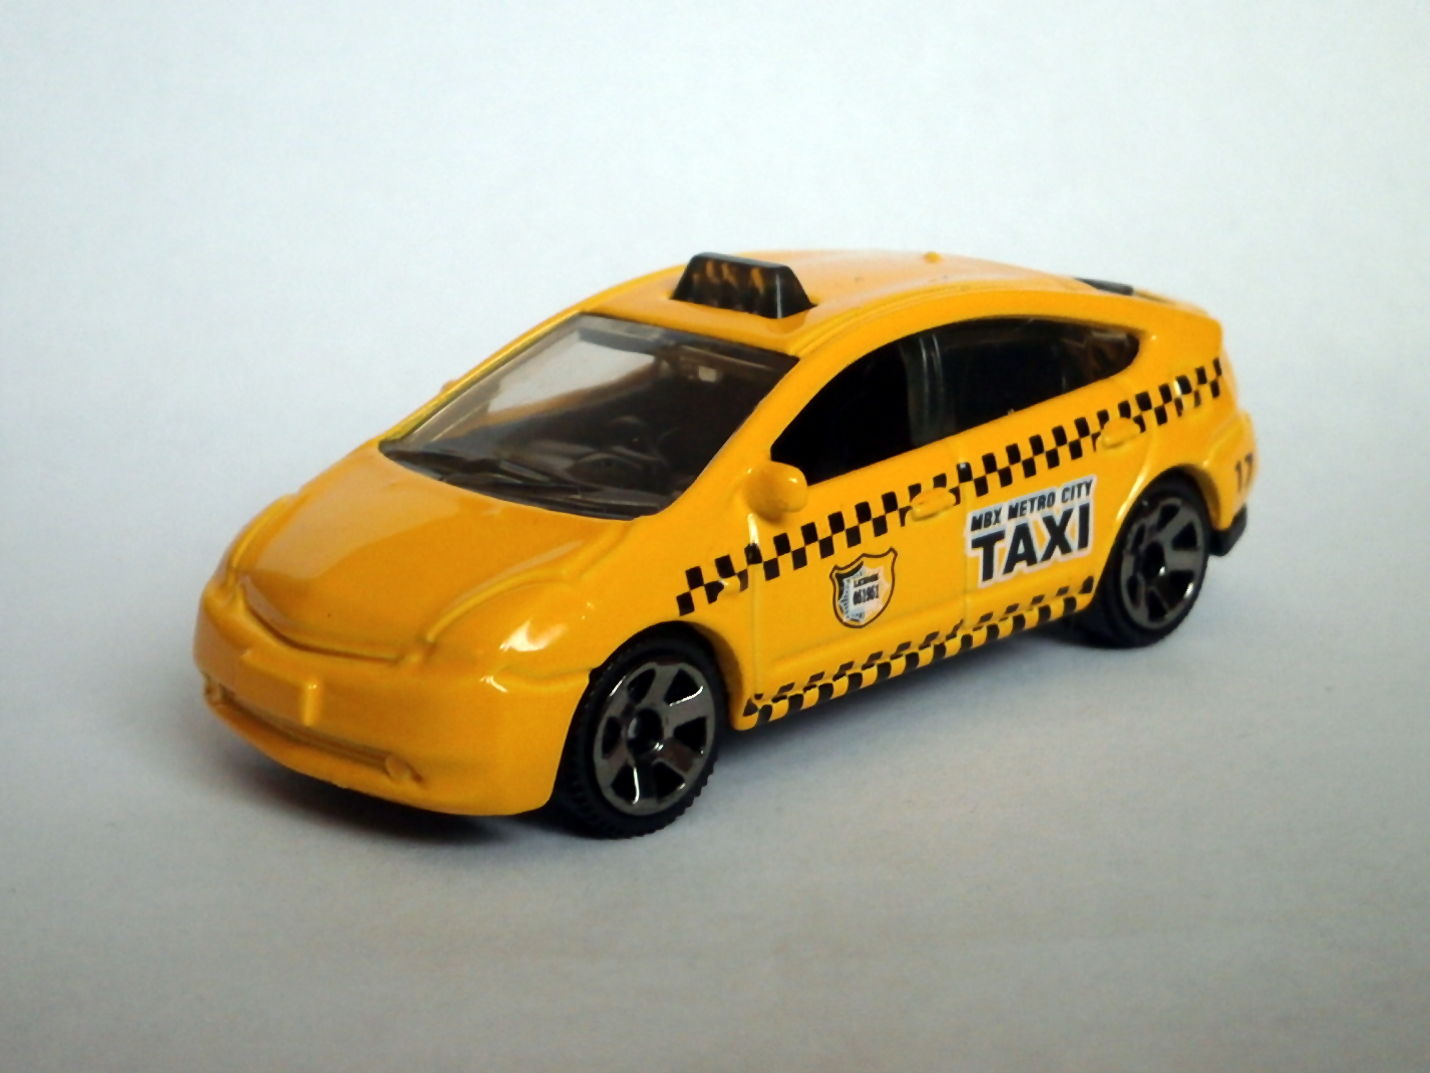 Toyota Prius Taxi | Matchbox Cars Wiki | Fandom